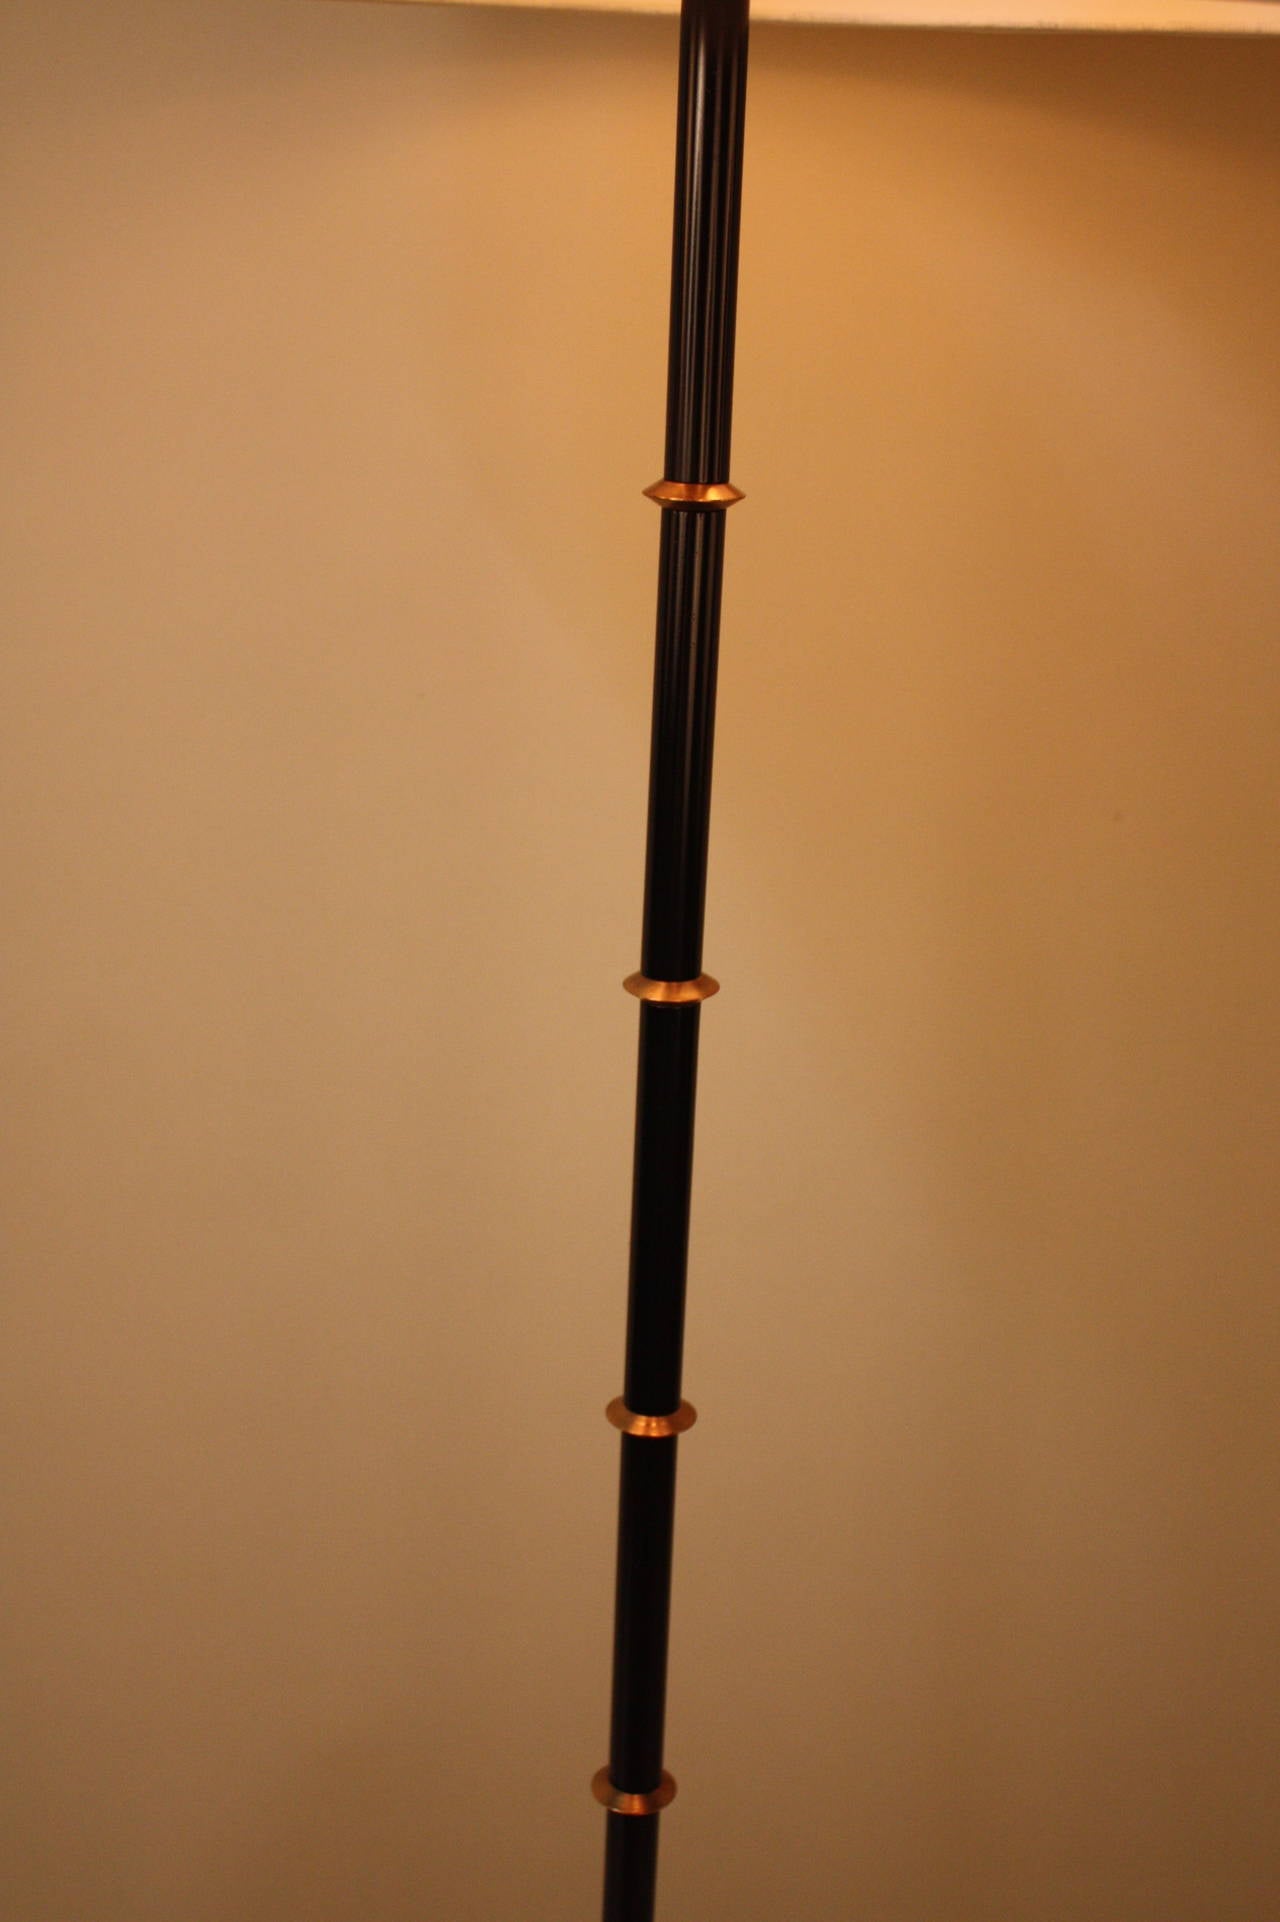 Elegant star base adjustable floor lamp in black and brass.